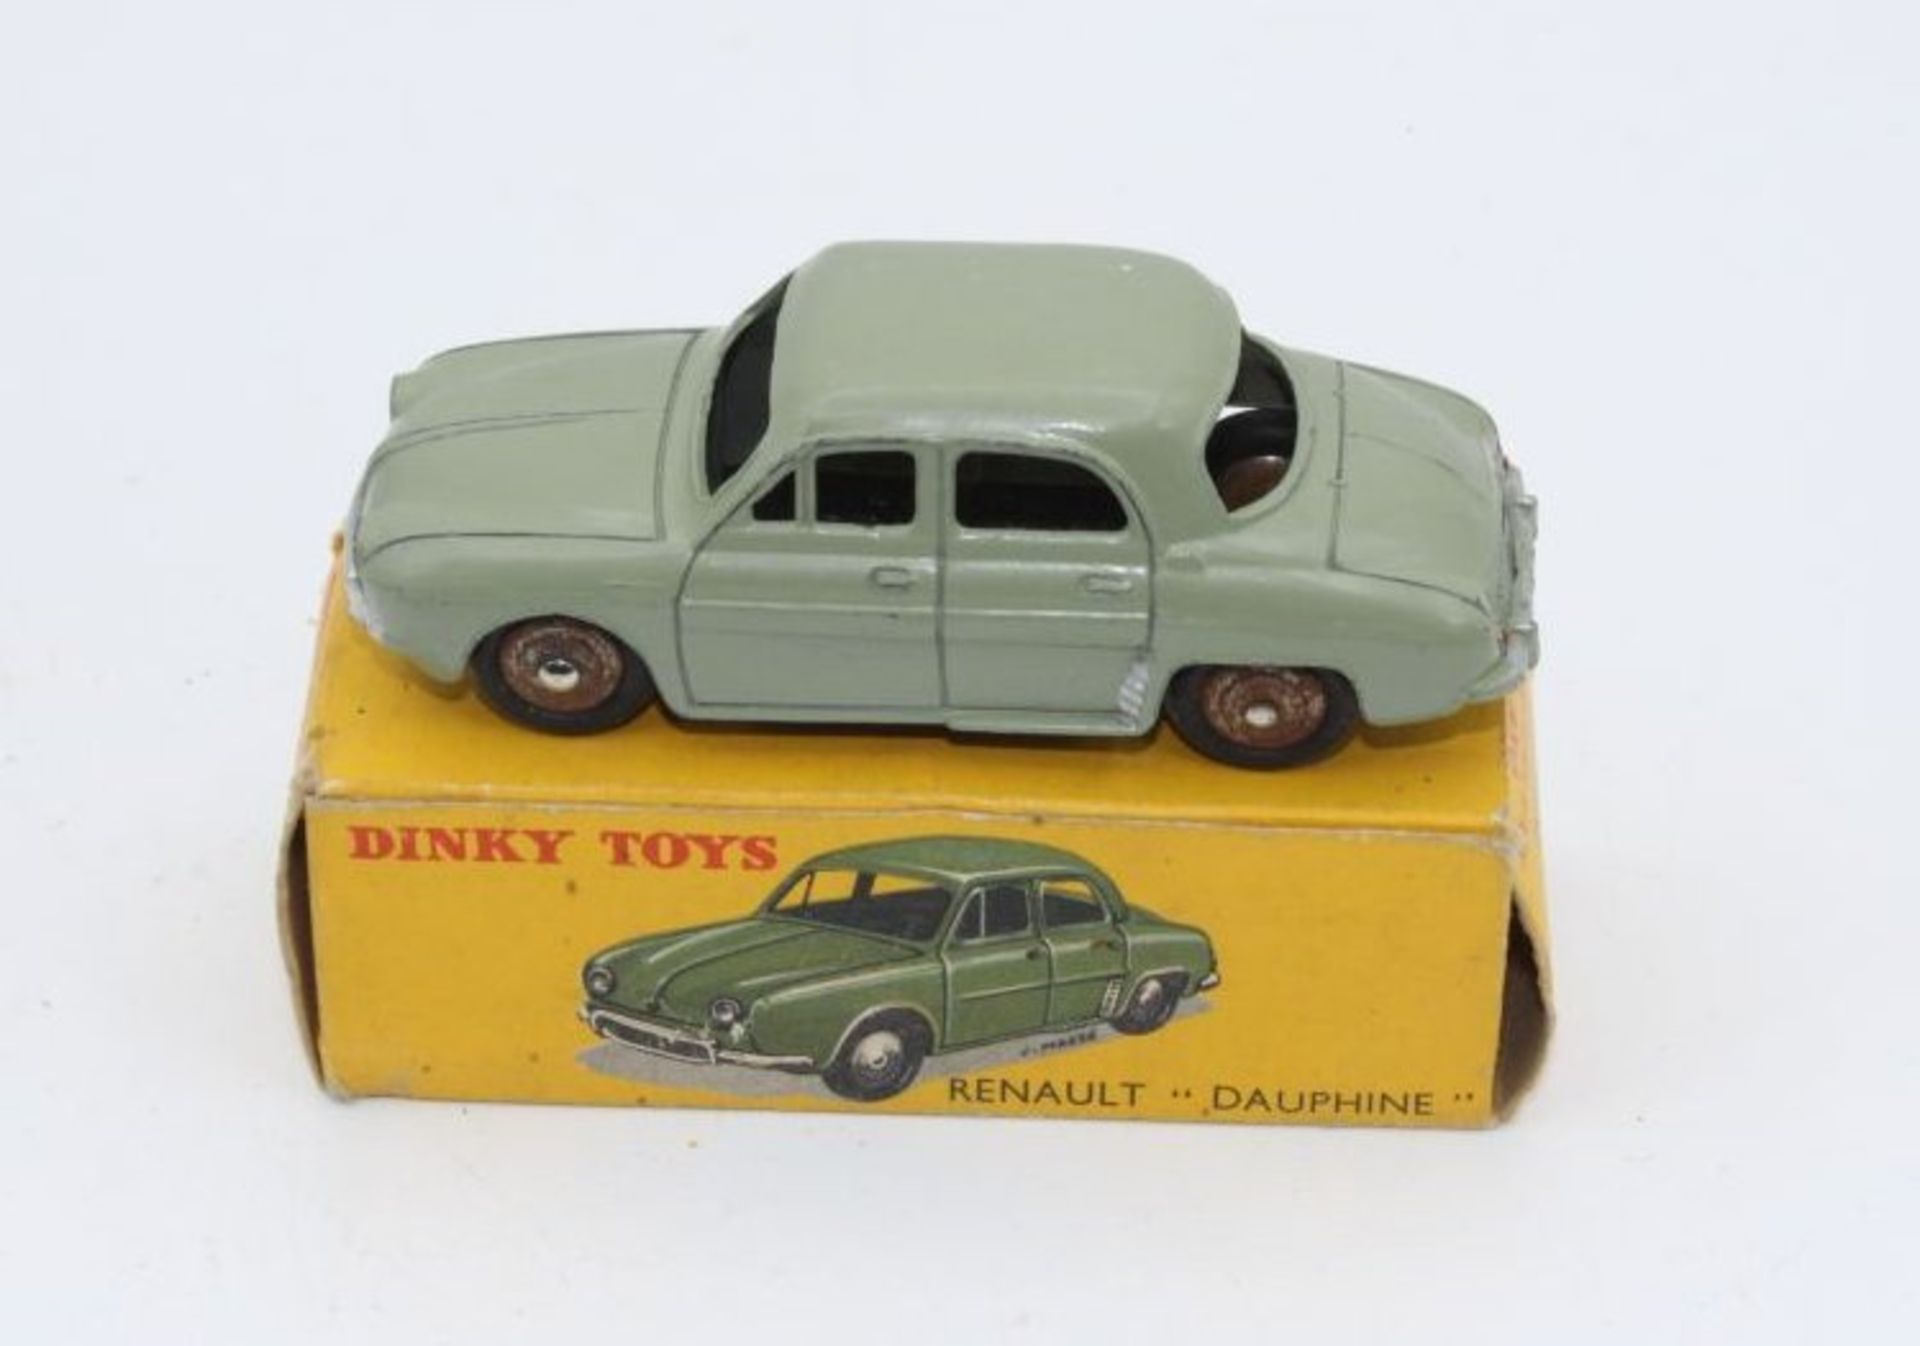 Dinky Toys "Renault Dauphine", Frankreich, 1:43, orig. Karton, Altersspuren.- - -22.61 % buyer's